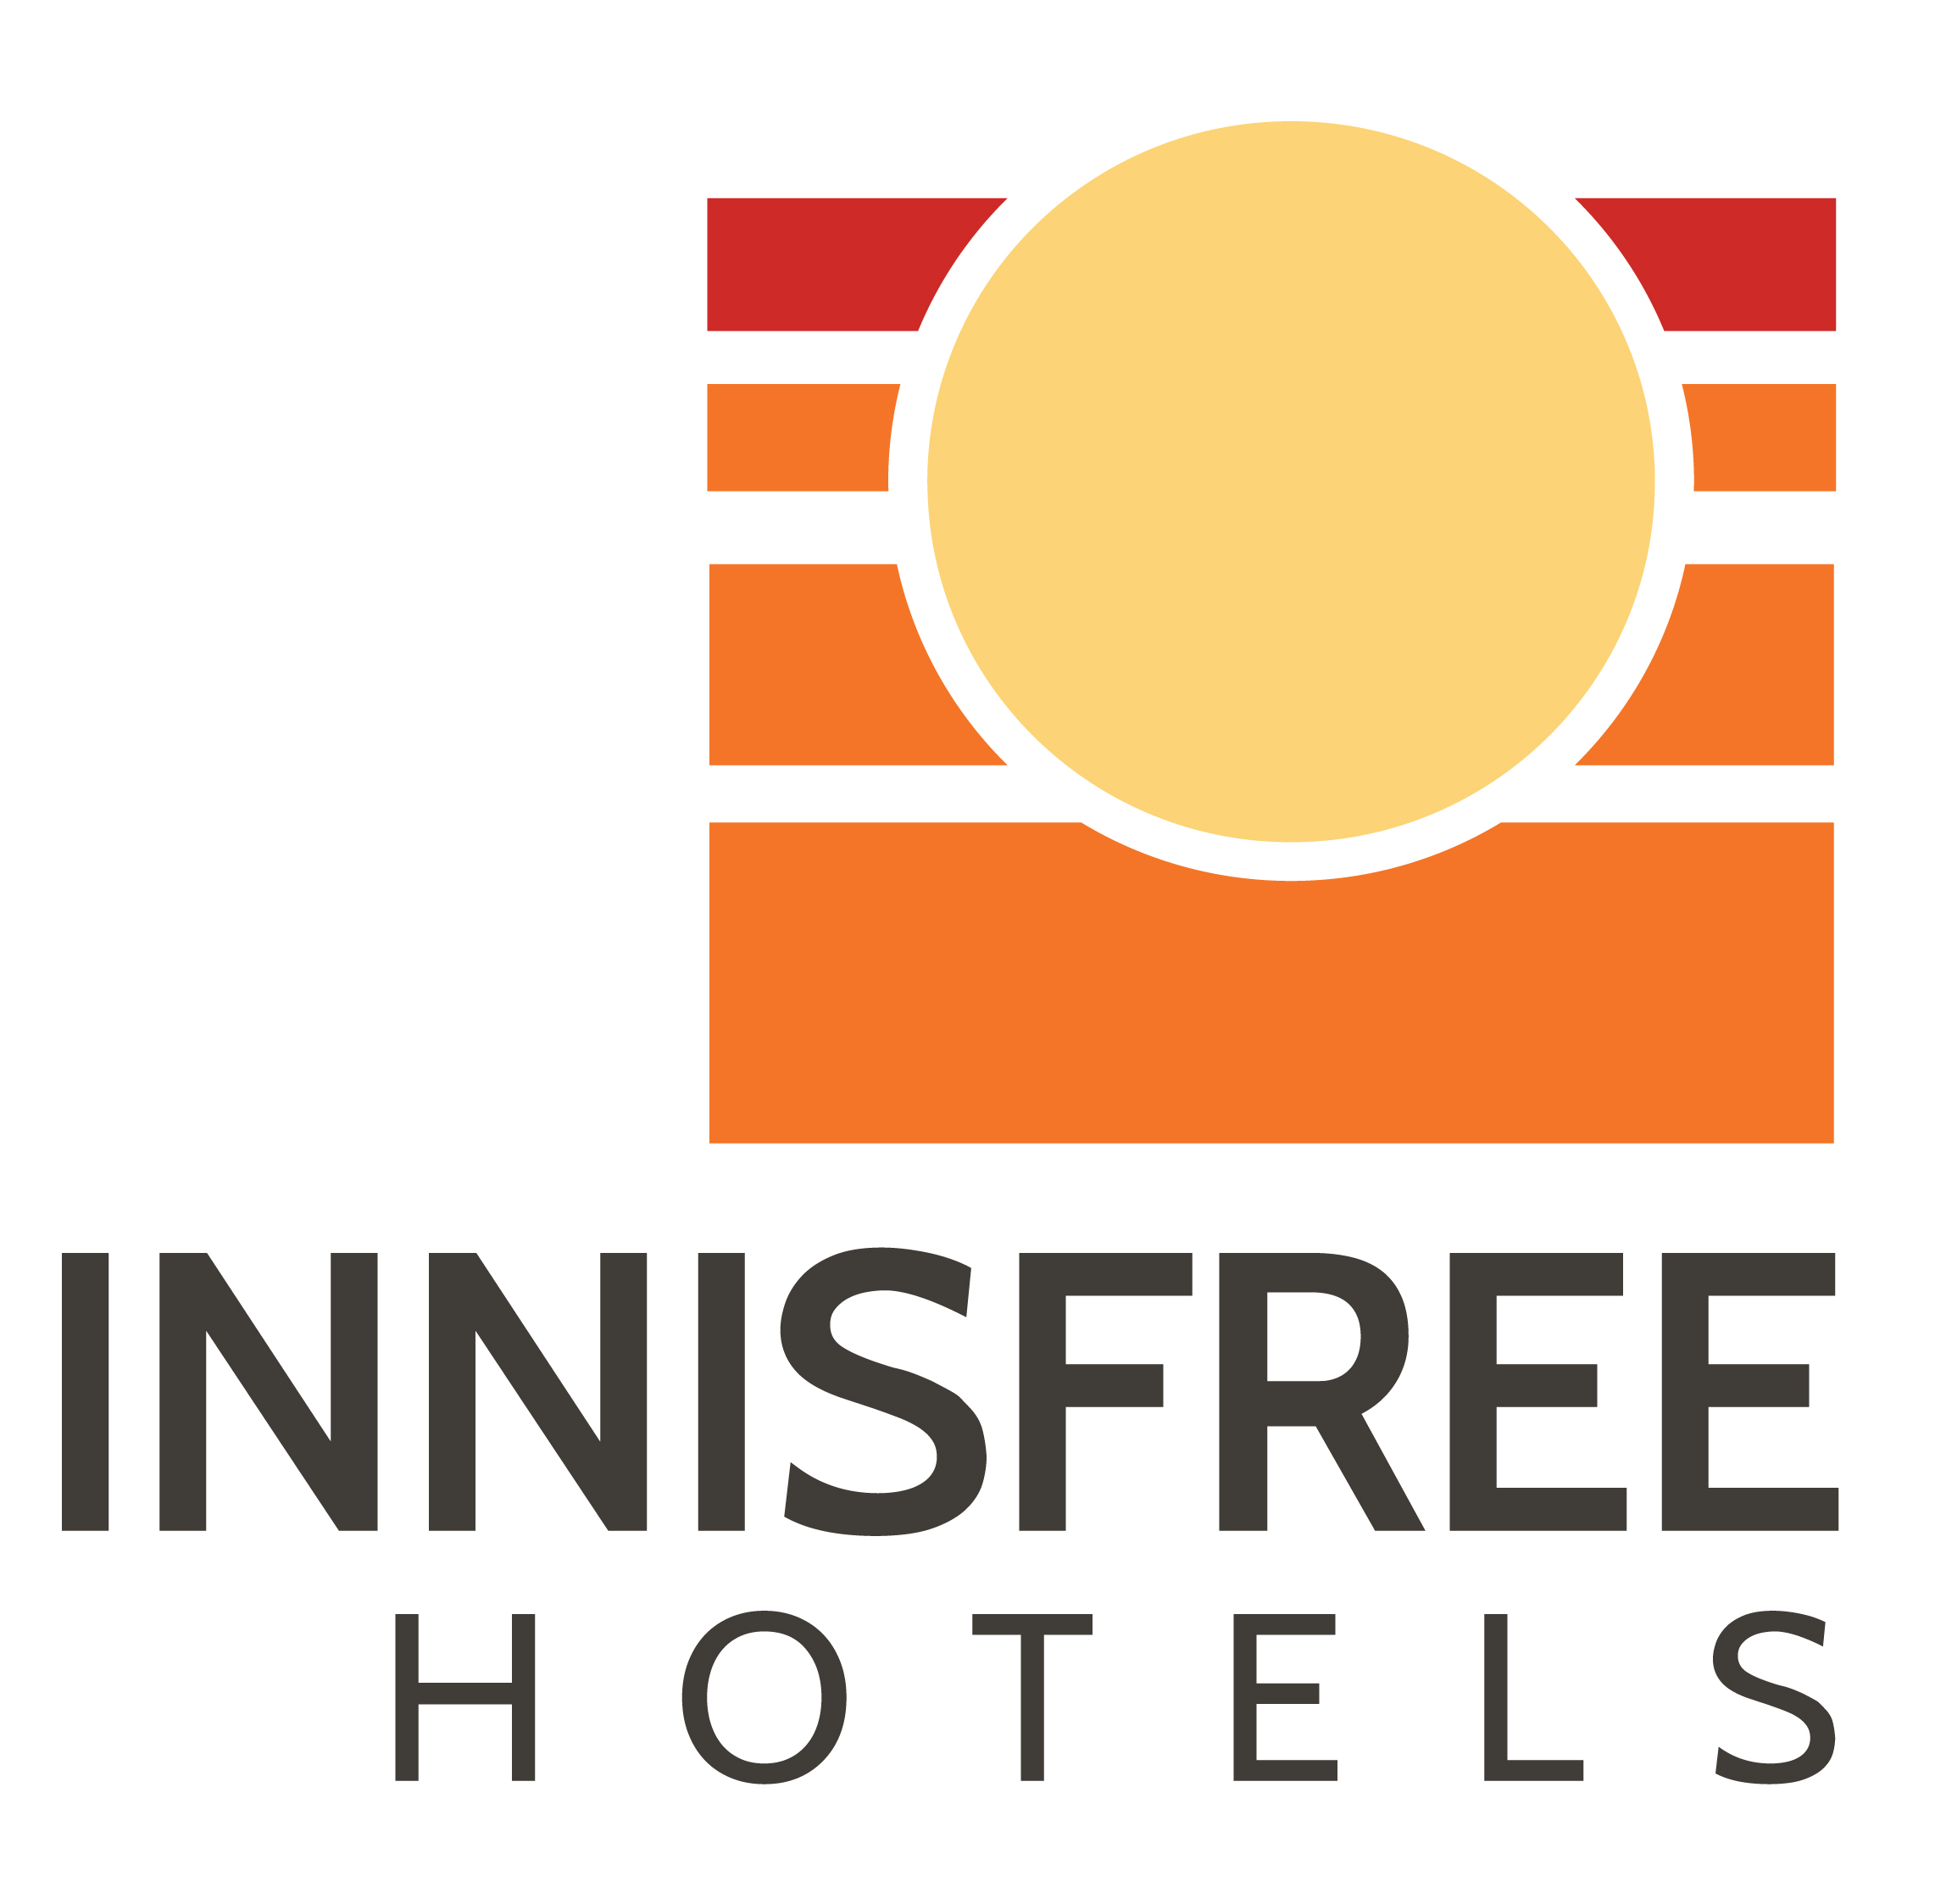 Innsfree Hotels logo